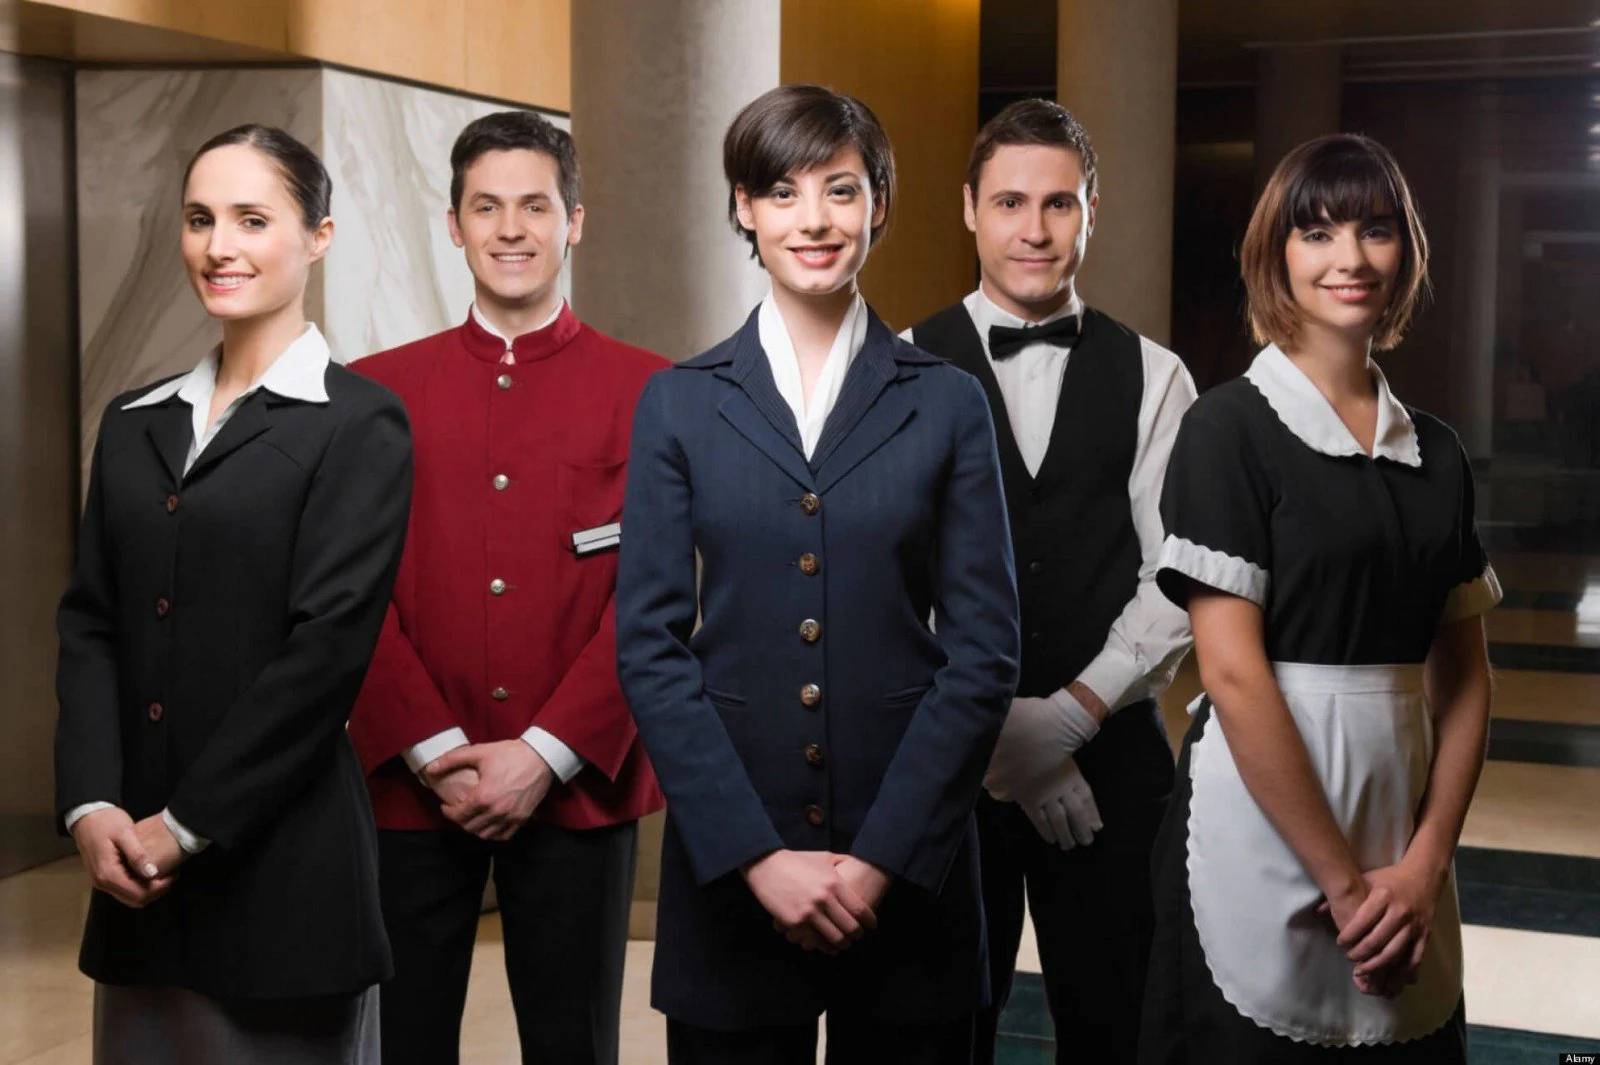  - Best 5 Hospitality Uniforms Companies